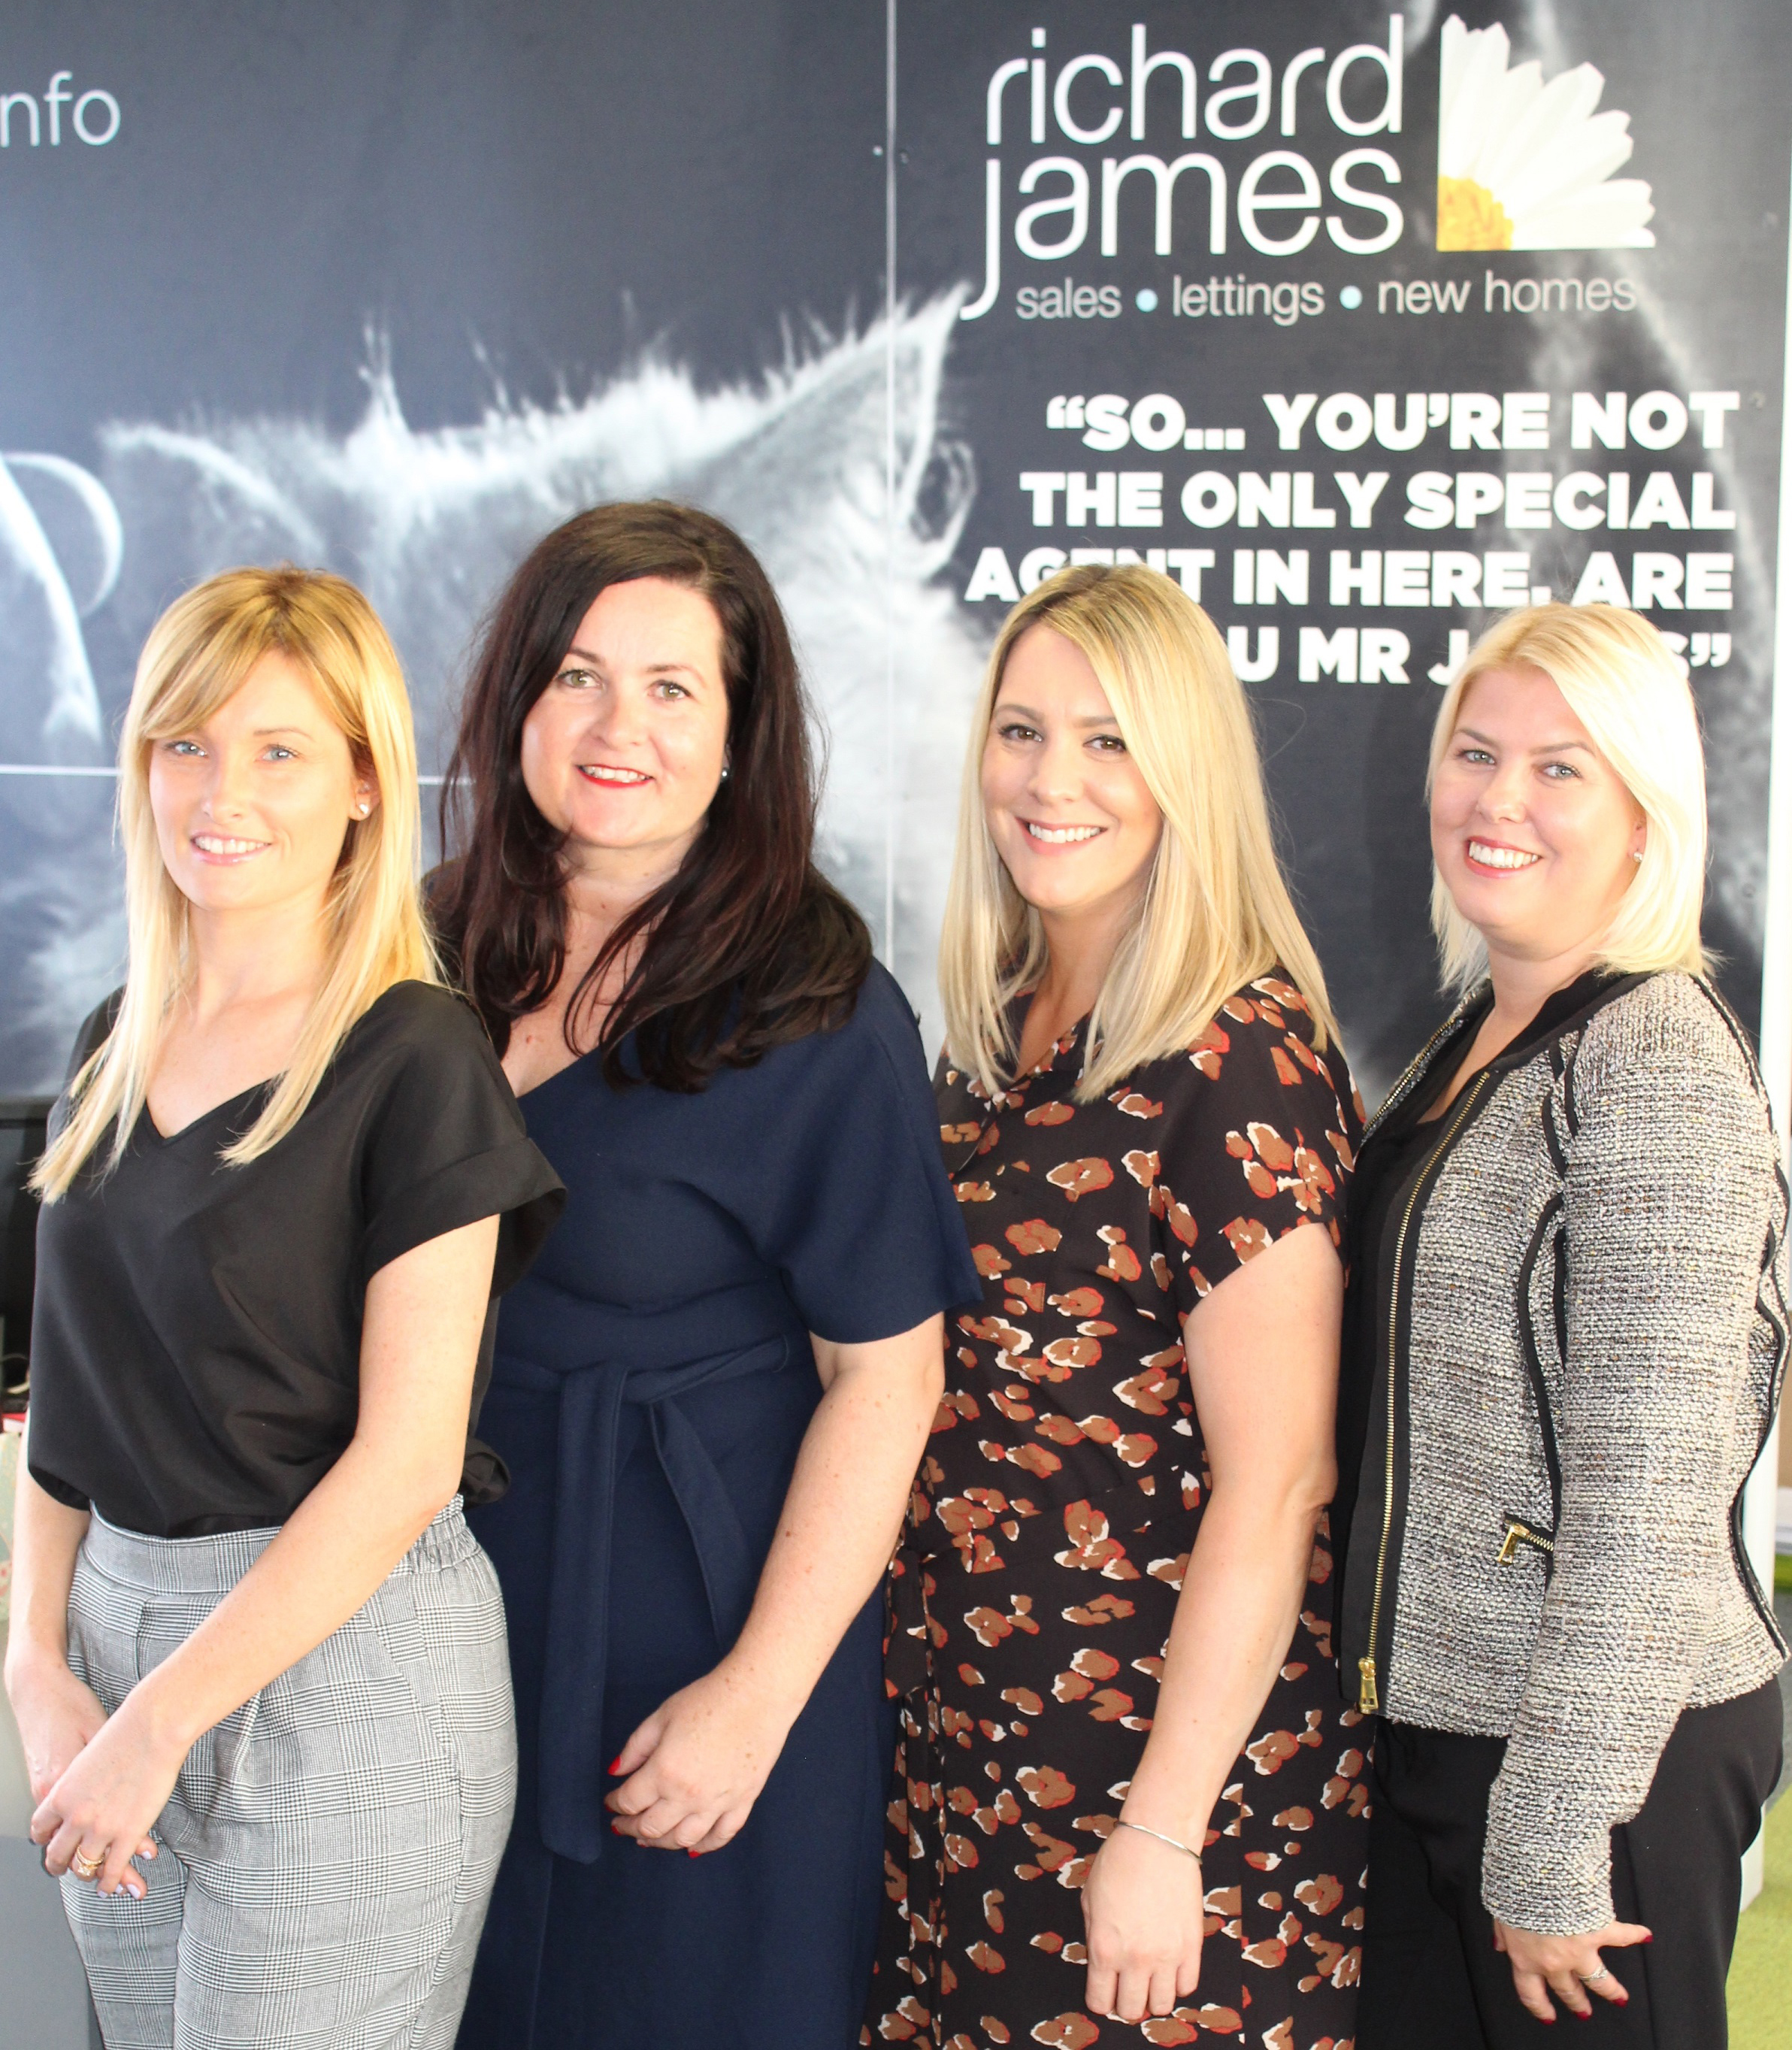 Joanna Hill, Rebecca Barrett, Nicola Bint and Caroline Shaefer of Richard James Estate Agents